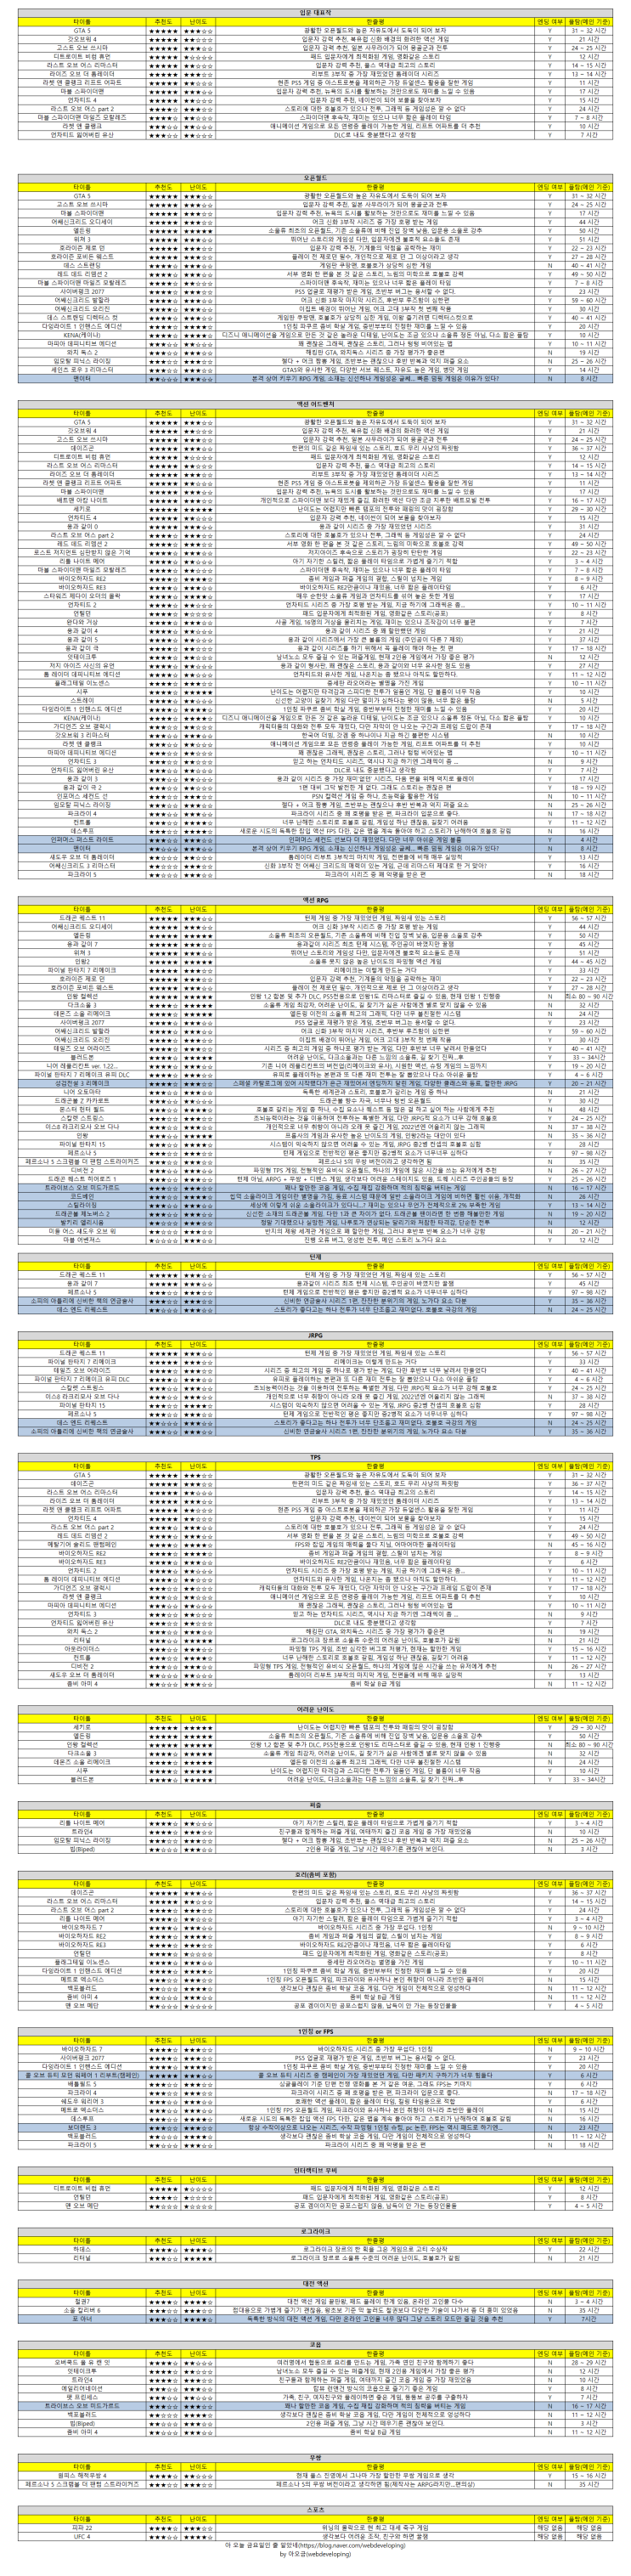 PS4 PS5 플스 게임 추천 총 정리 + 리스트 작성 과정 (2022.11.08)